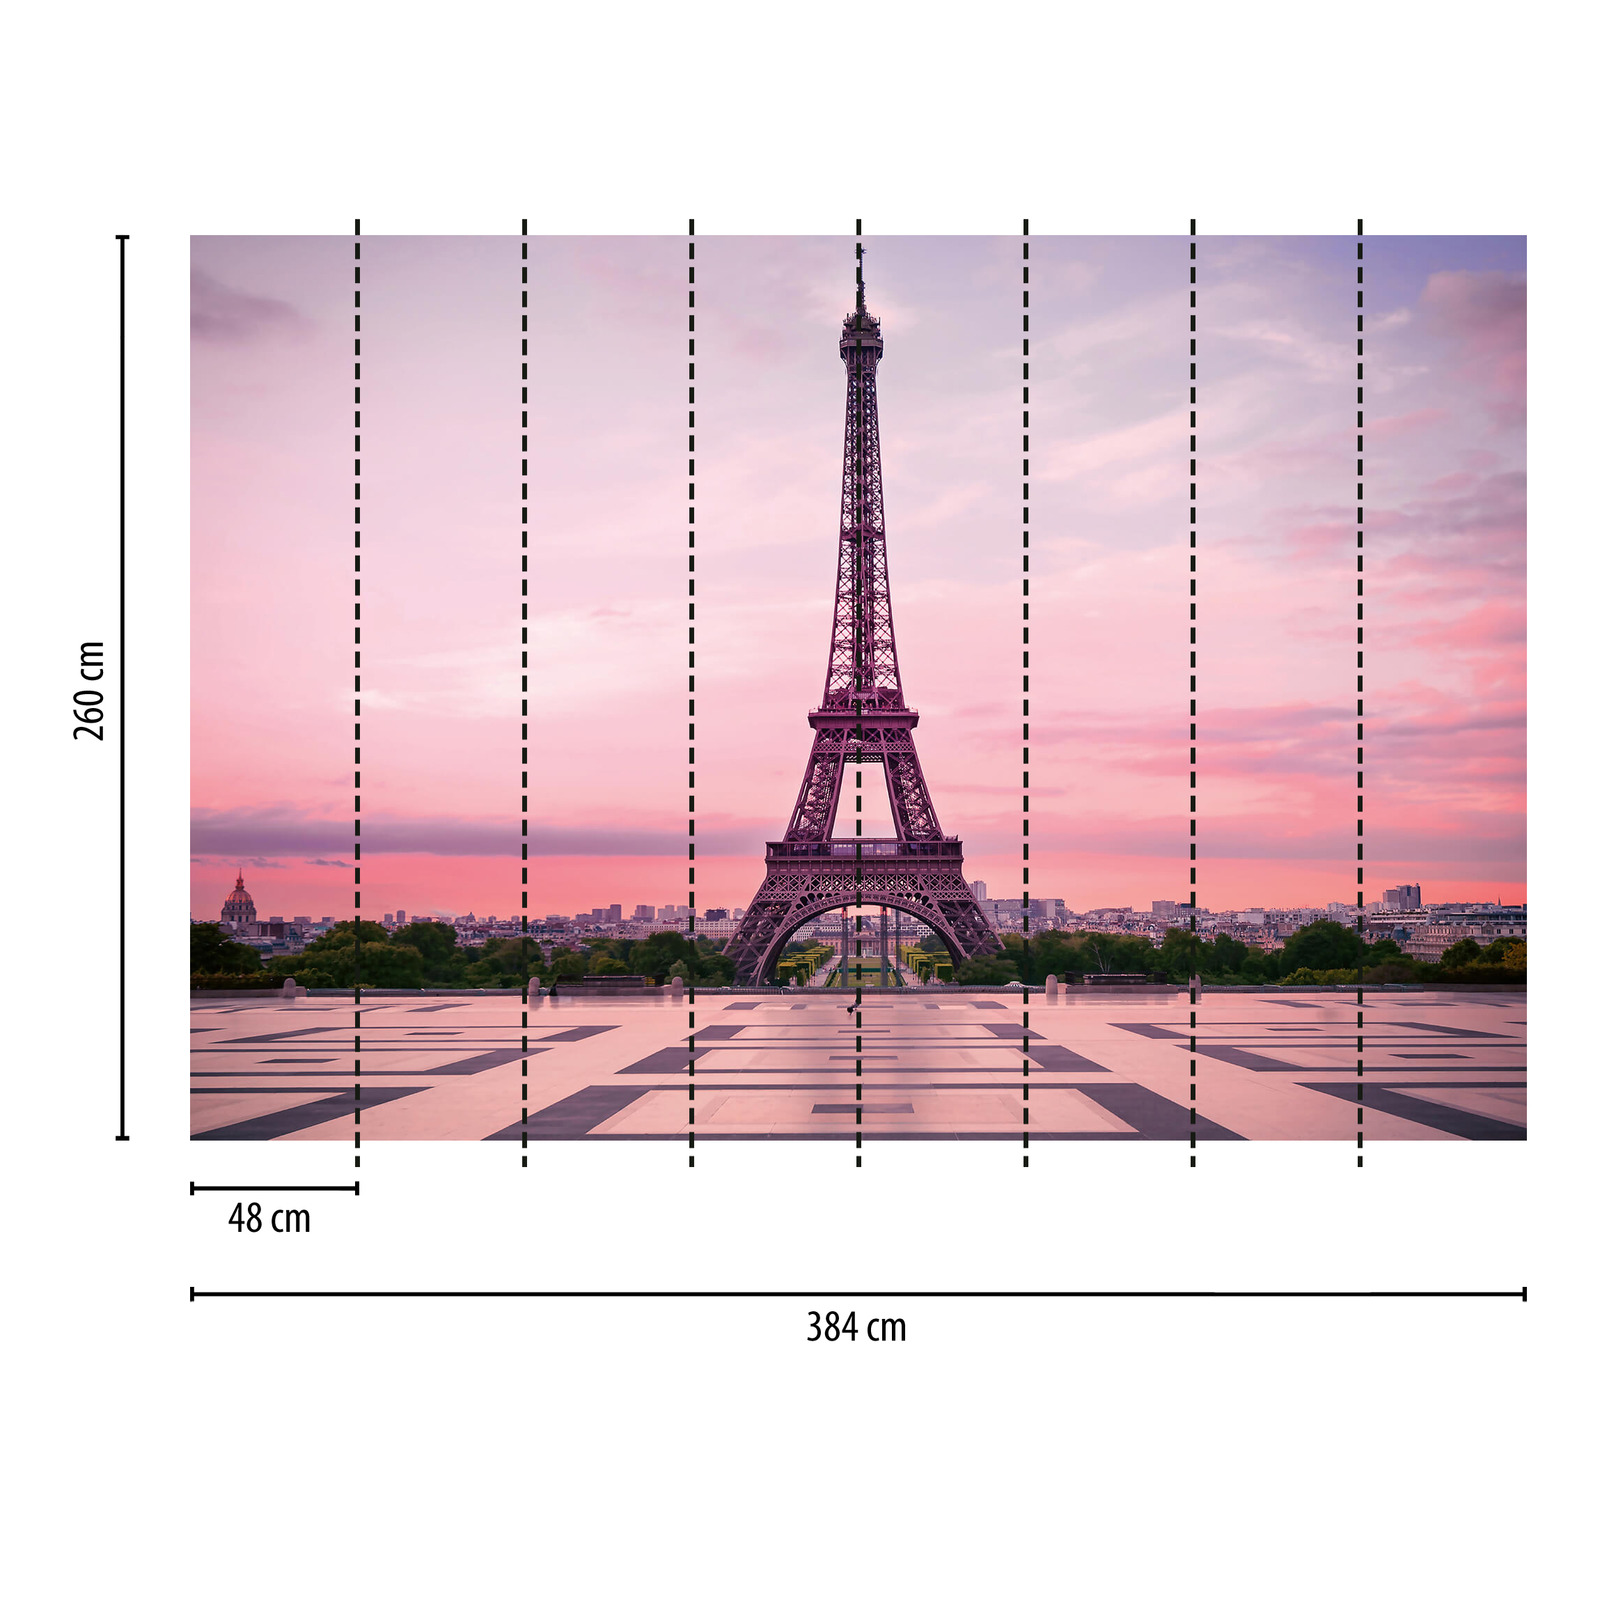             Mural Torre Eiffel París al atardecer
        